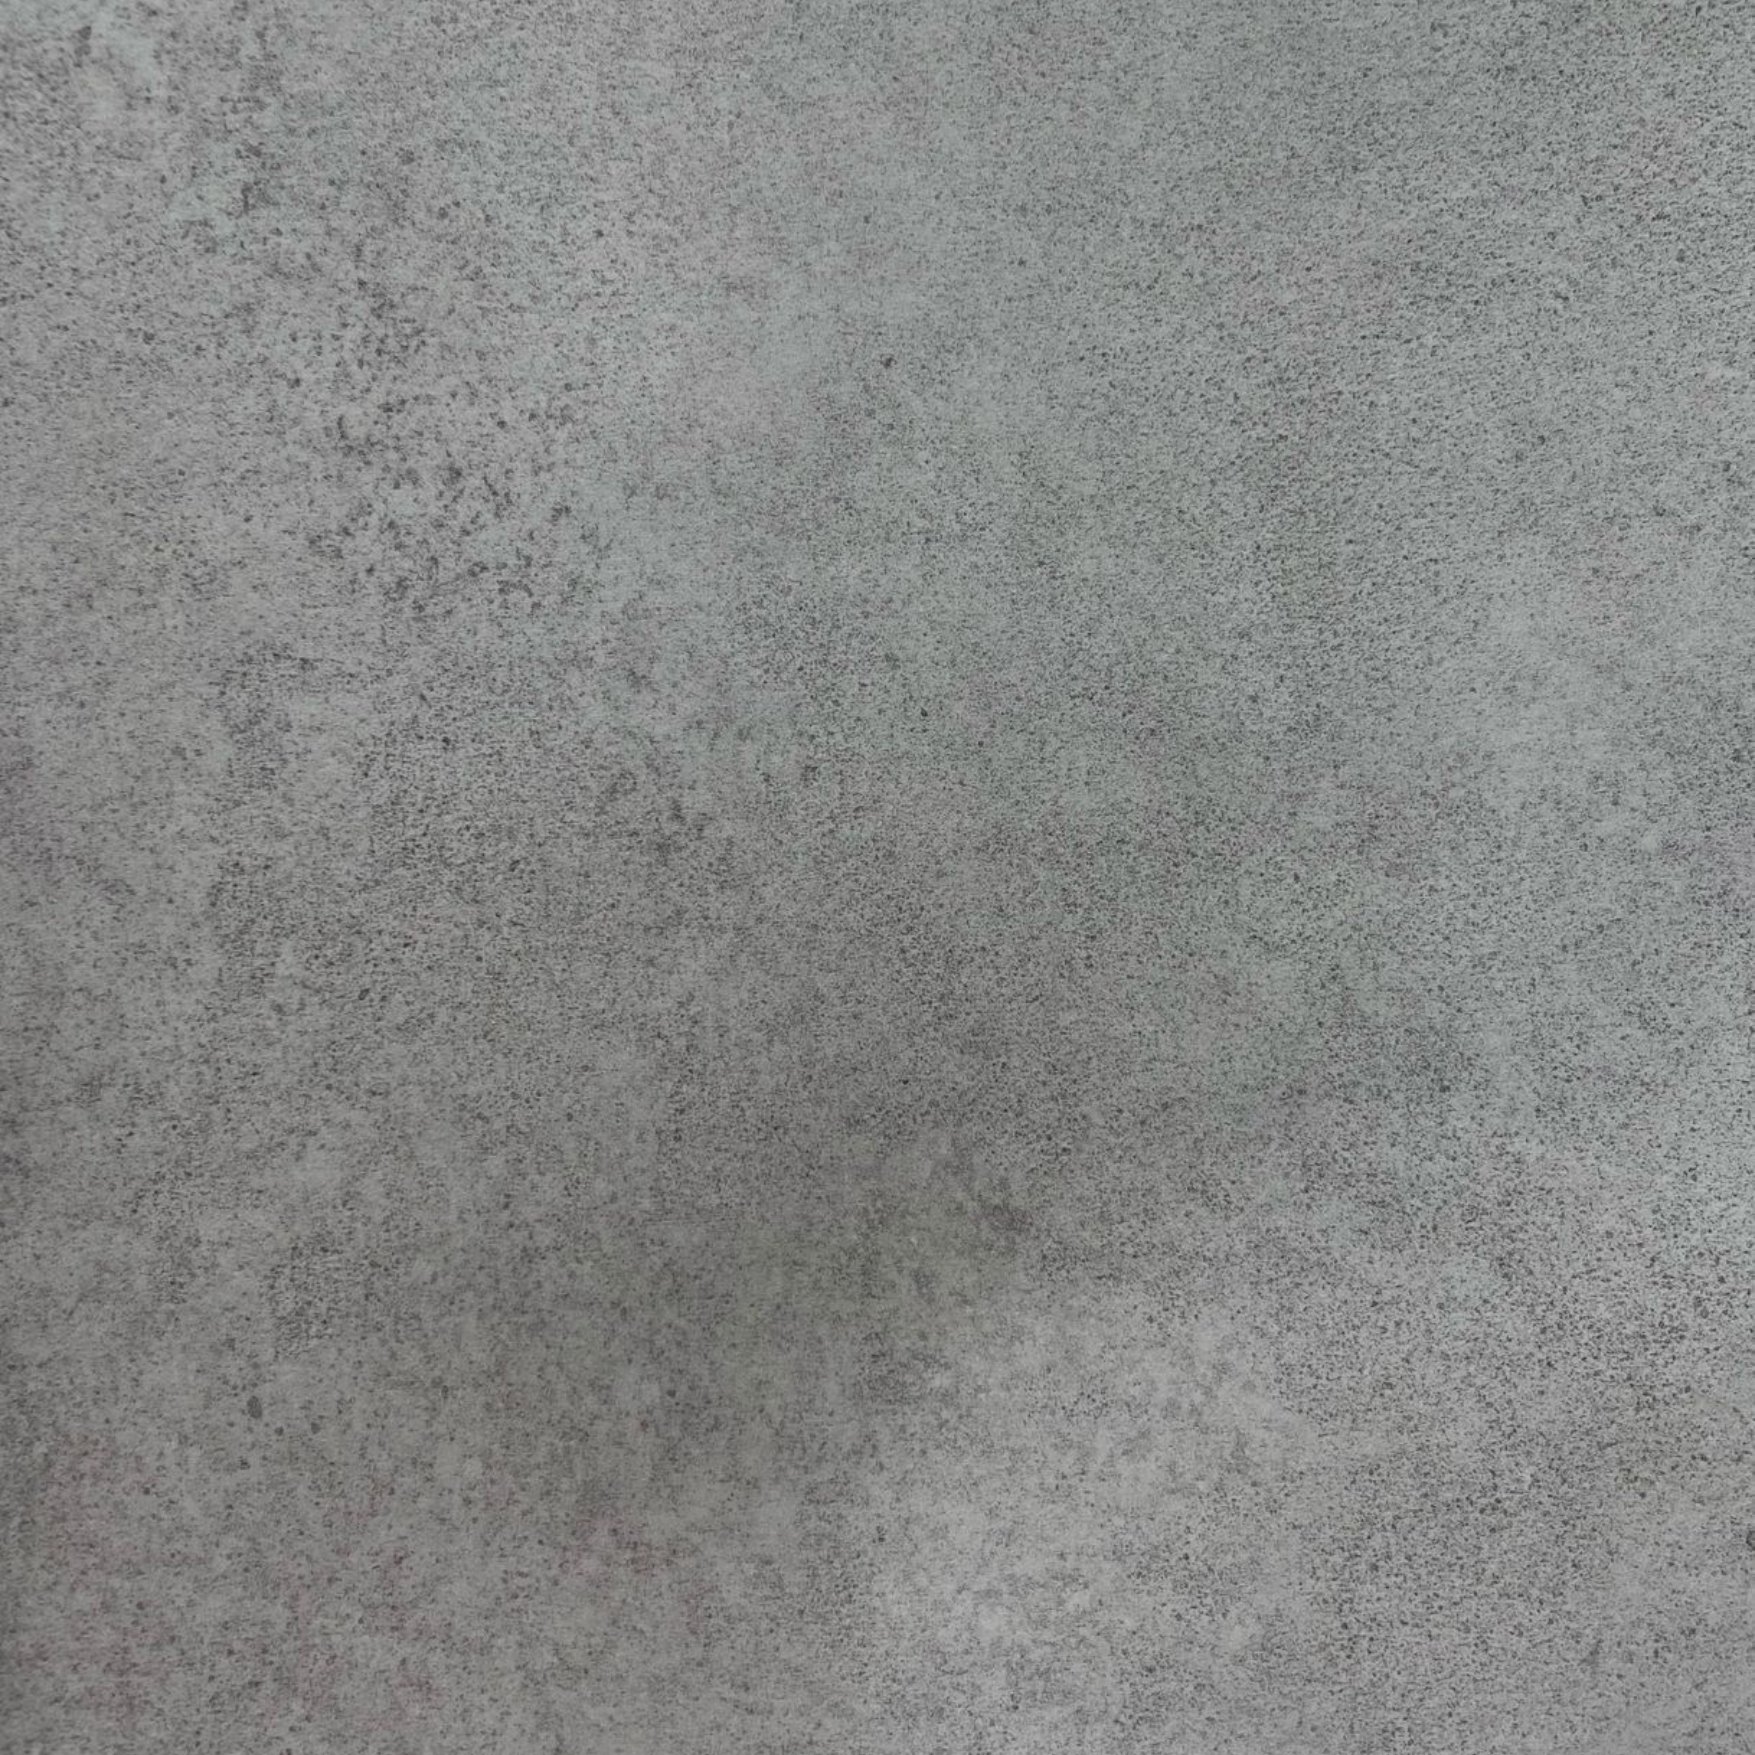 Piso Vinilico em Manta Liso Fosco, Antiderrapante, Pvc, 0,70mm 4m² Cimento Rústico - 5